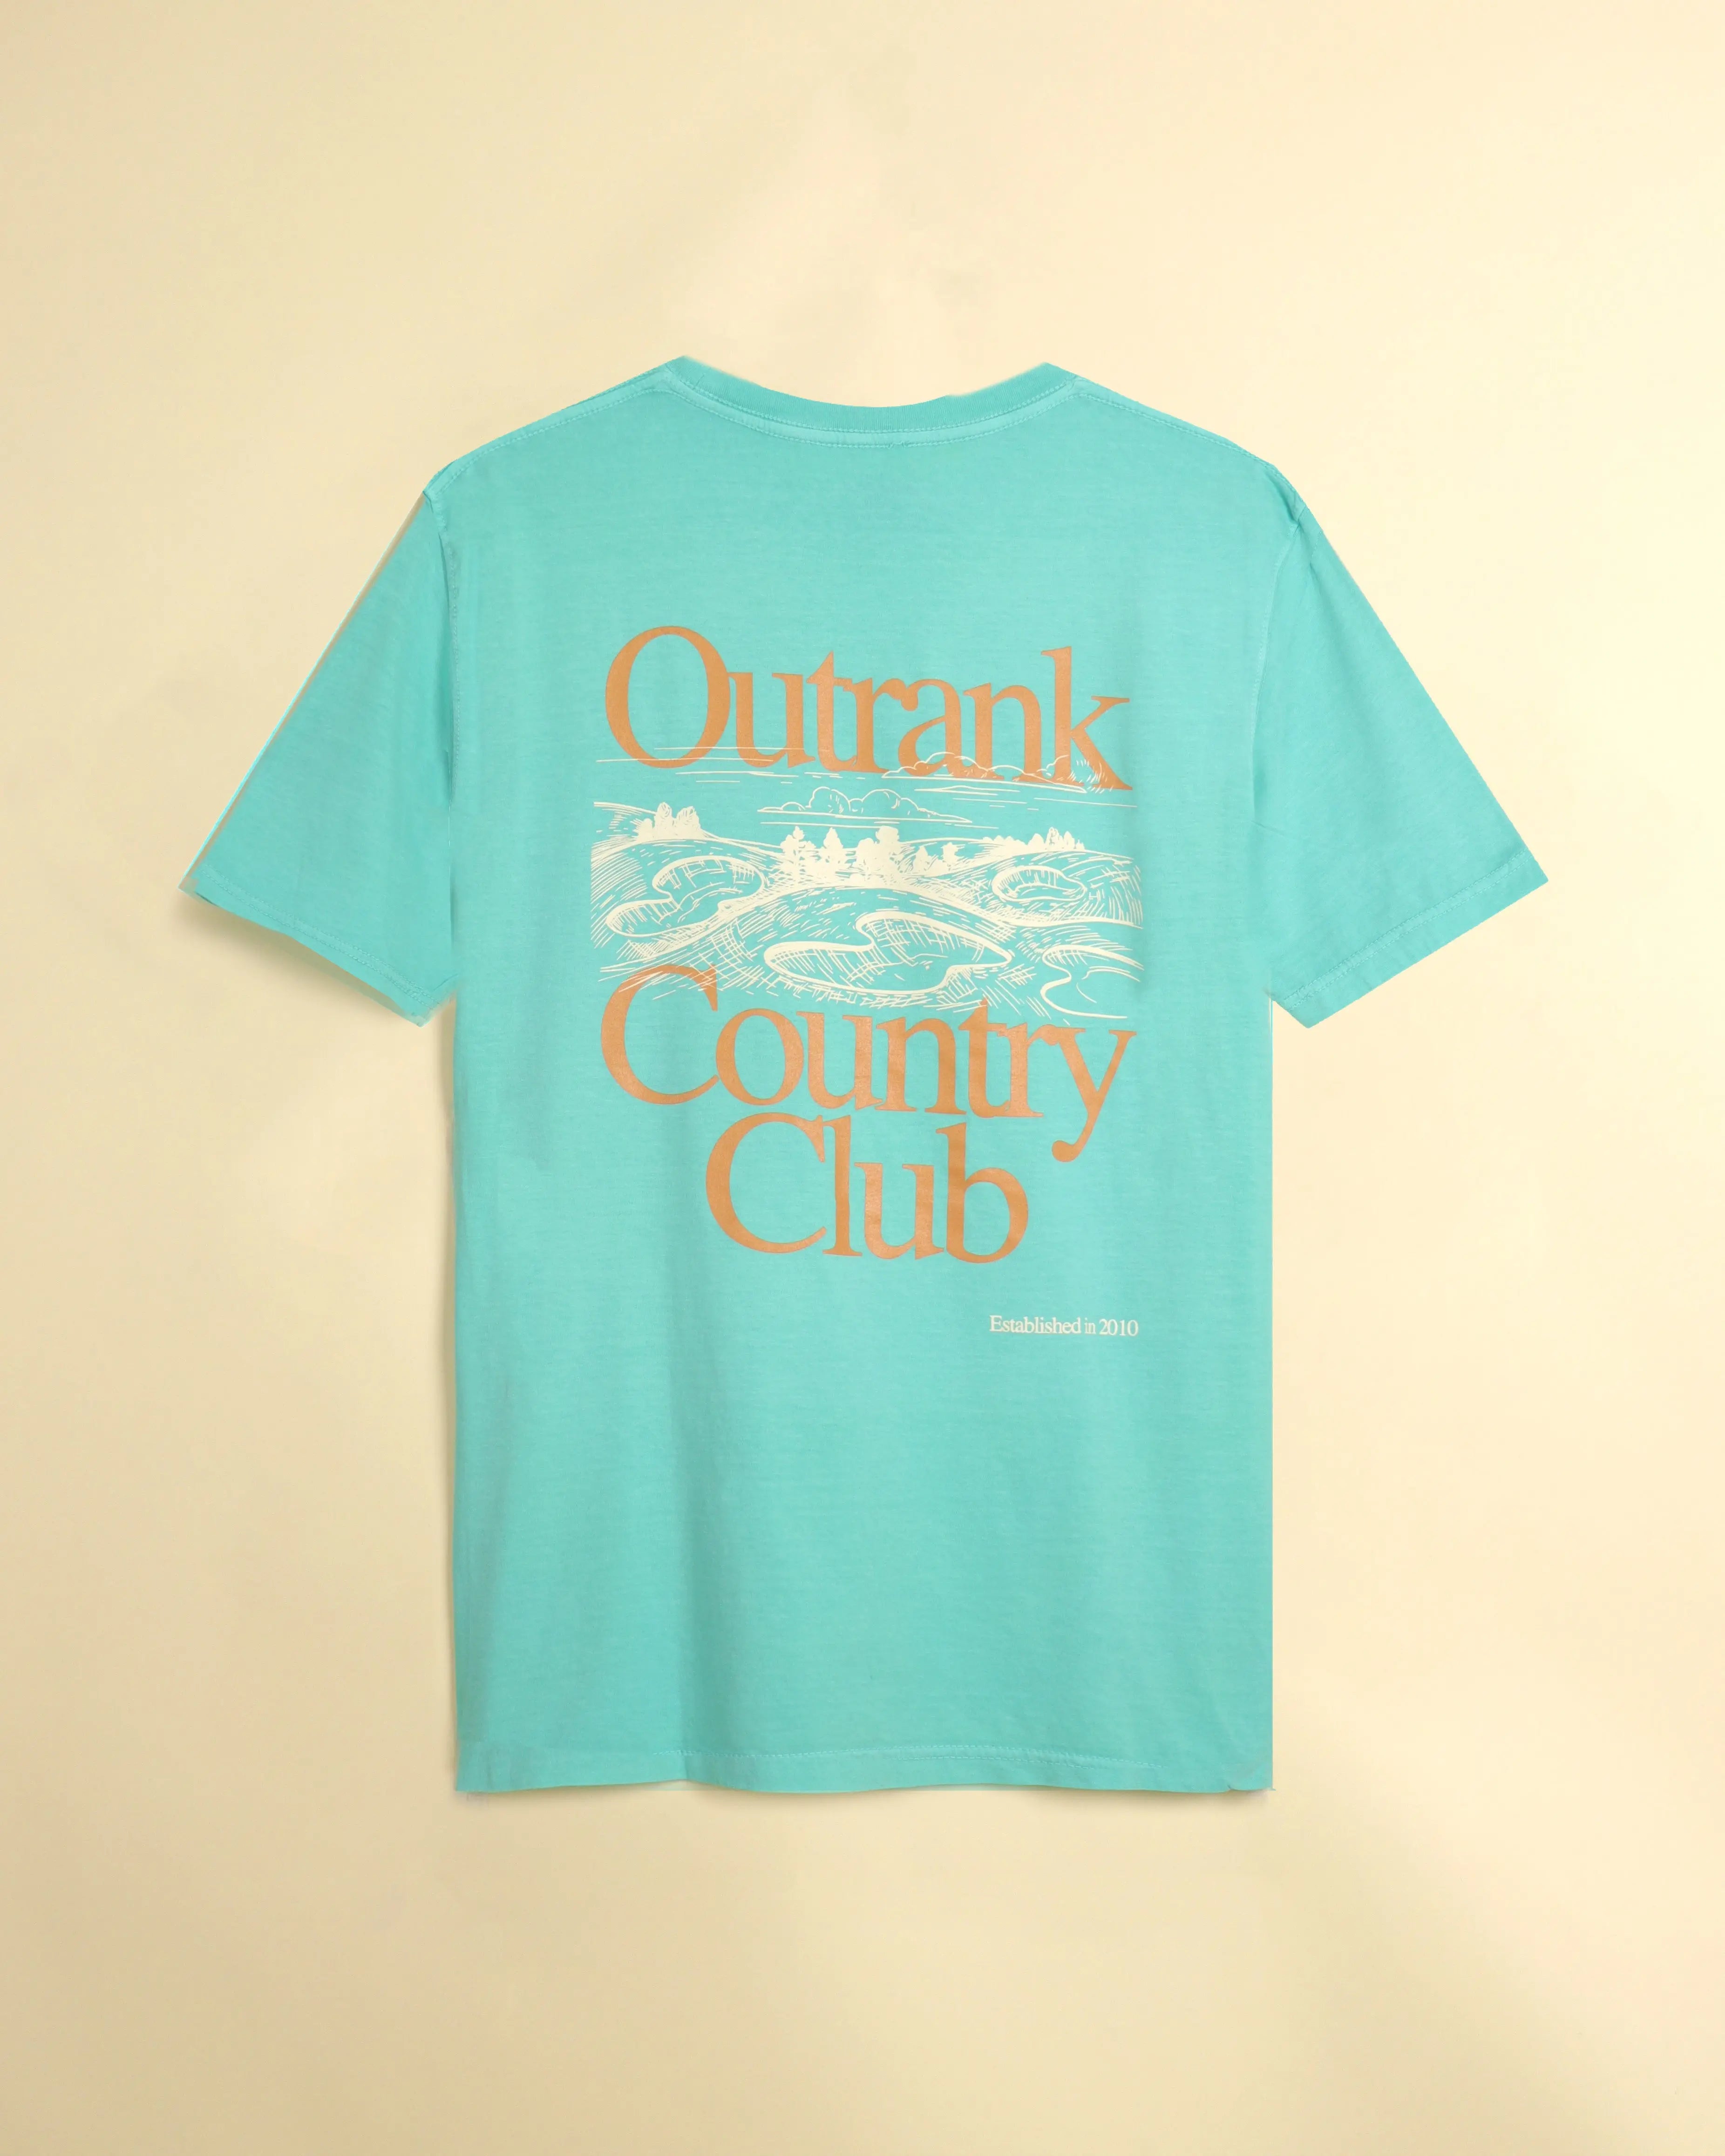 Outrank Country Club- Sea Glass Outrank Brand